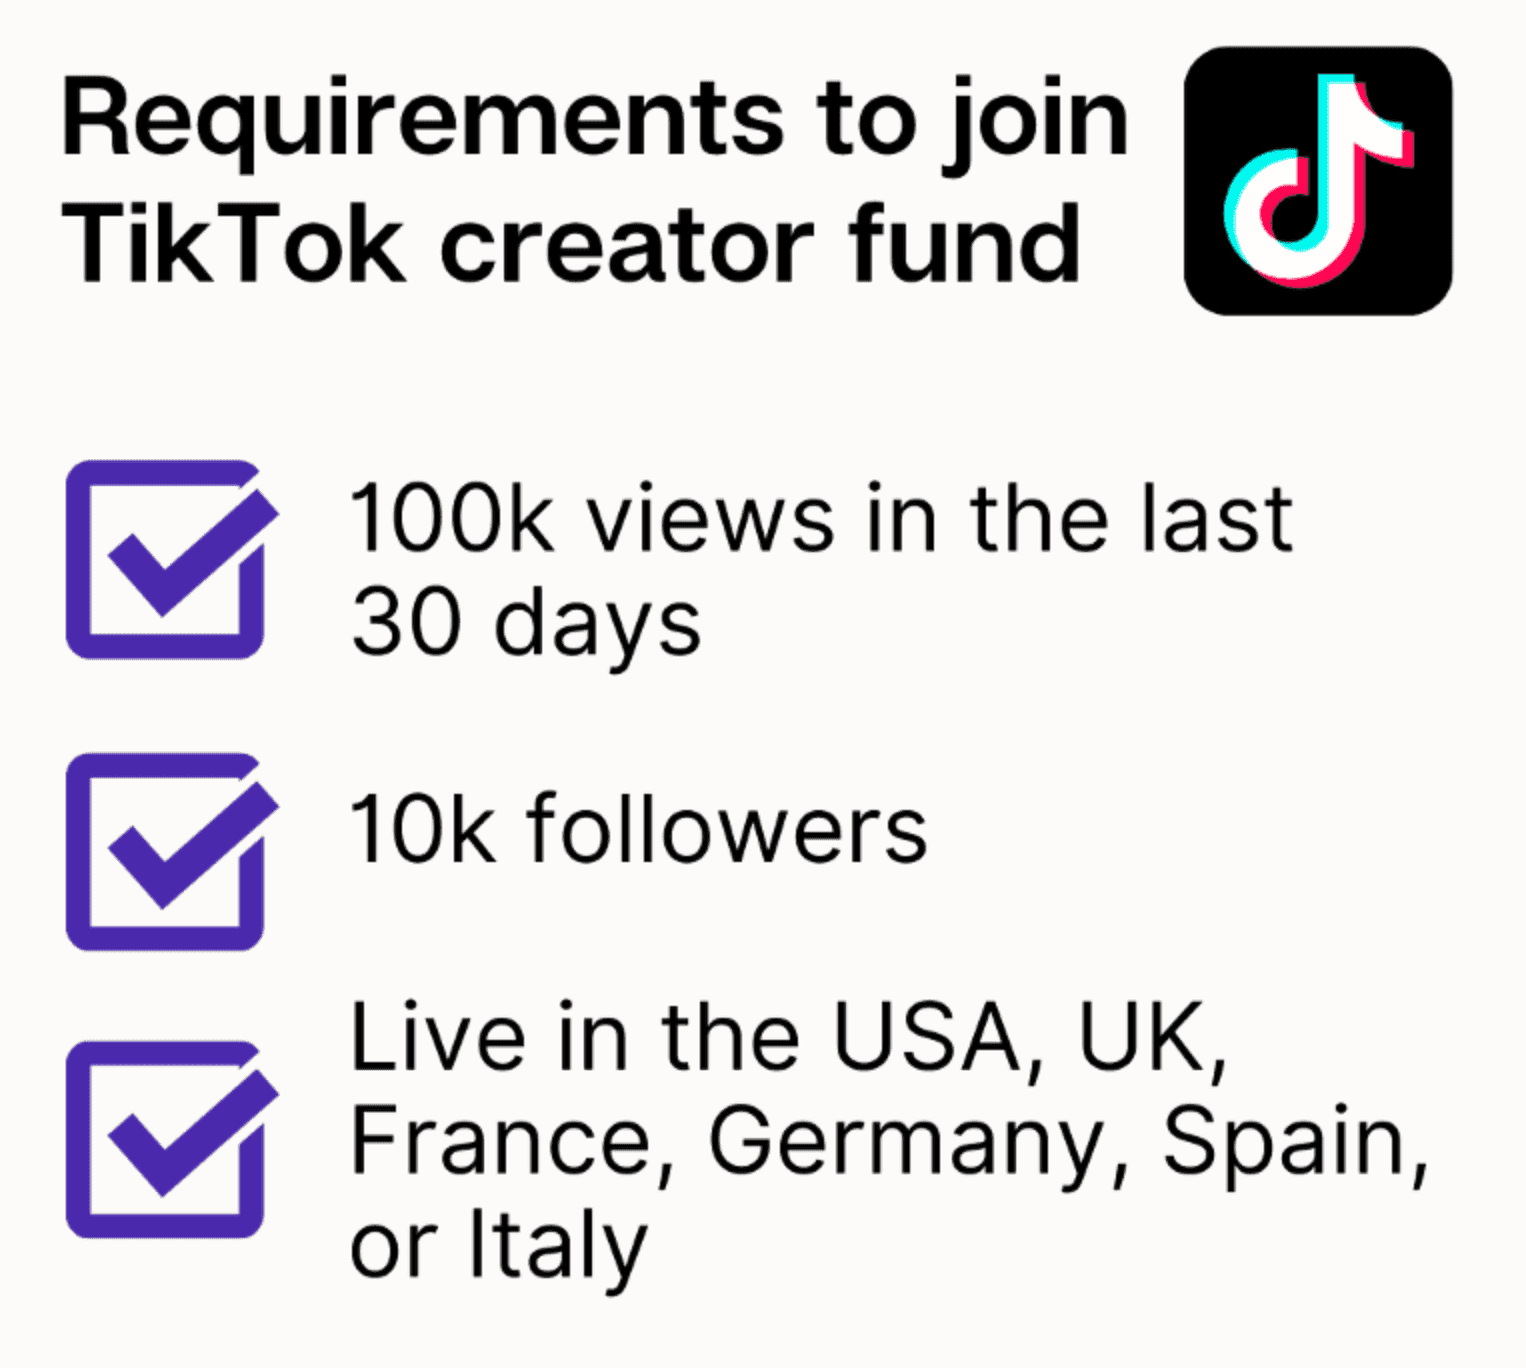 Requirements to join TikTok creator fund checklist